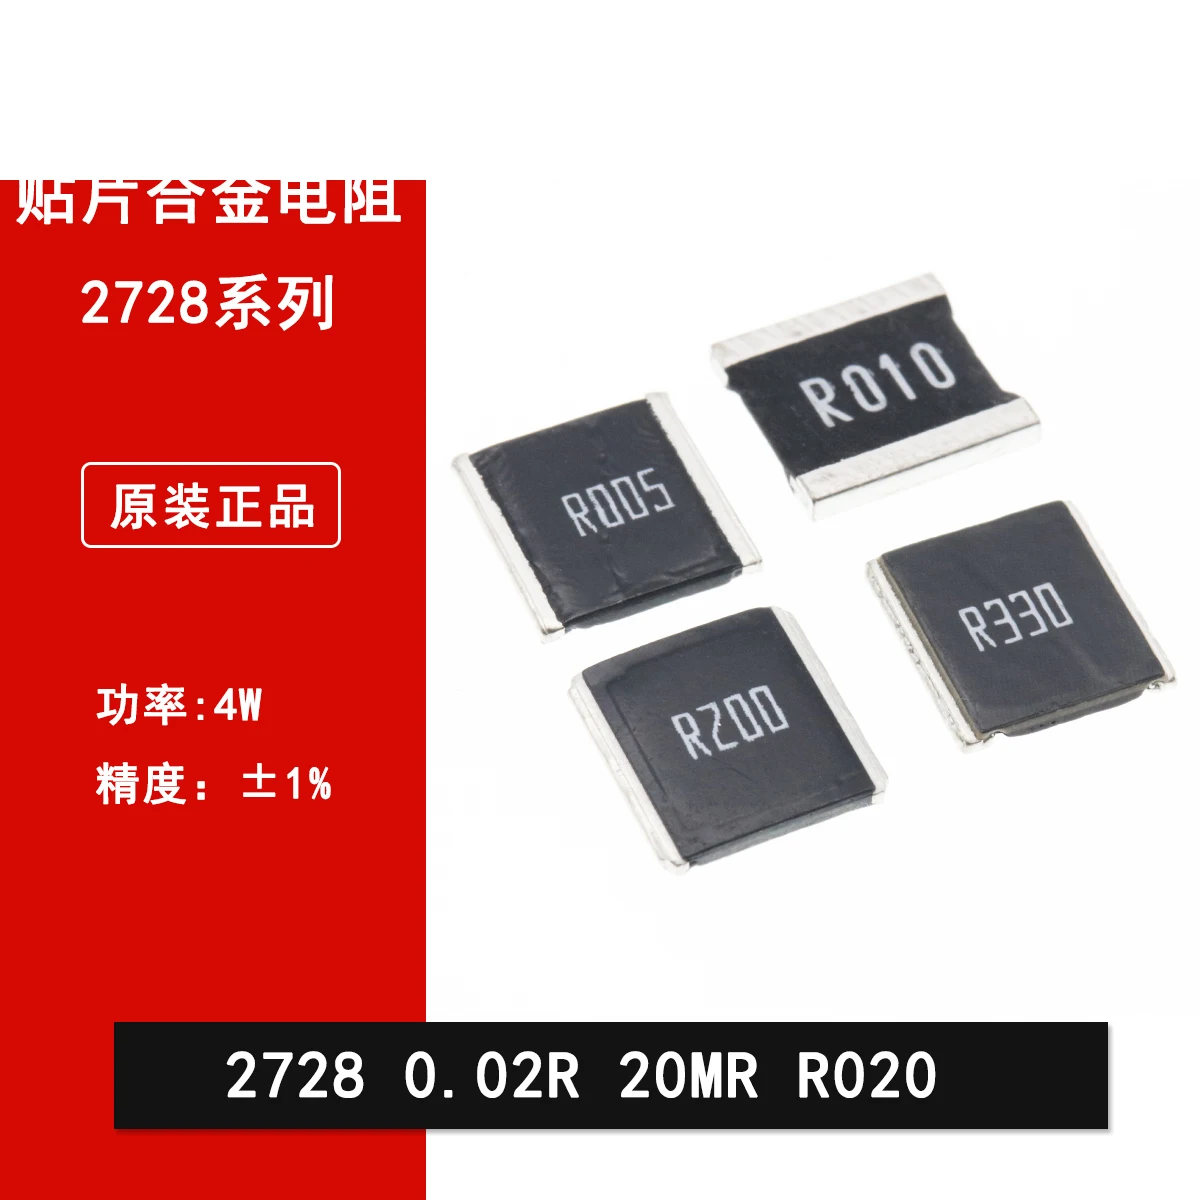 Резистор за вземане на проби от сплави 2728 SMD 0,02 R 20mR R020 20 миллиом 1% точност сила резистор 4 W - 0